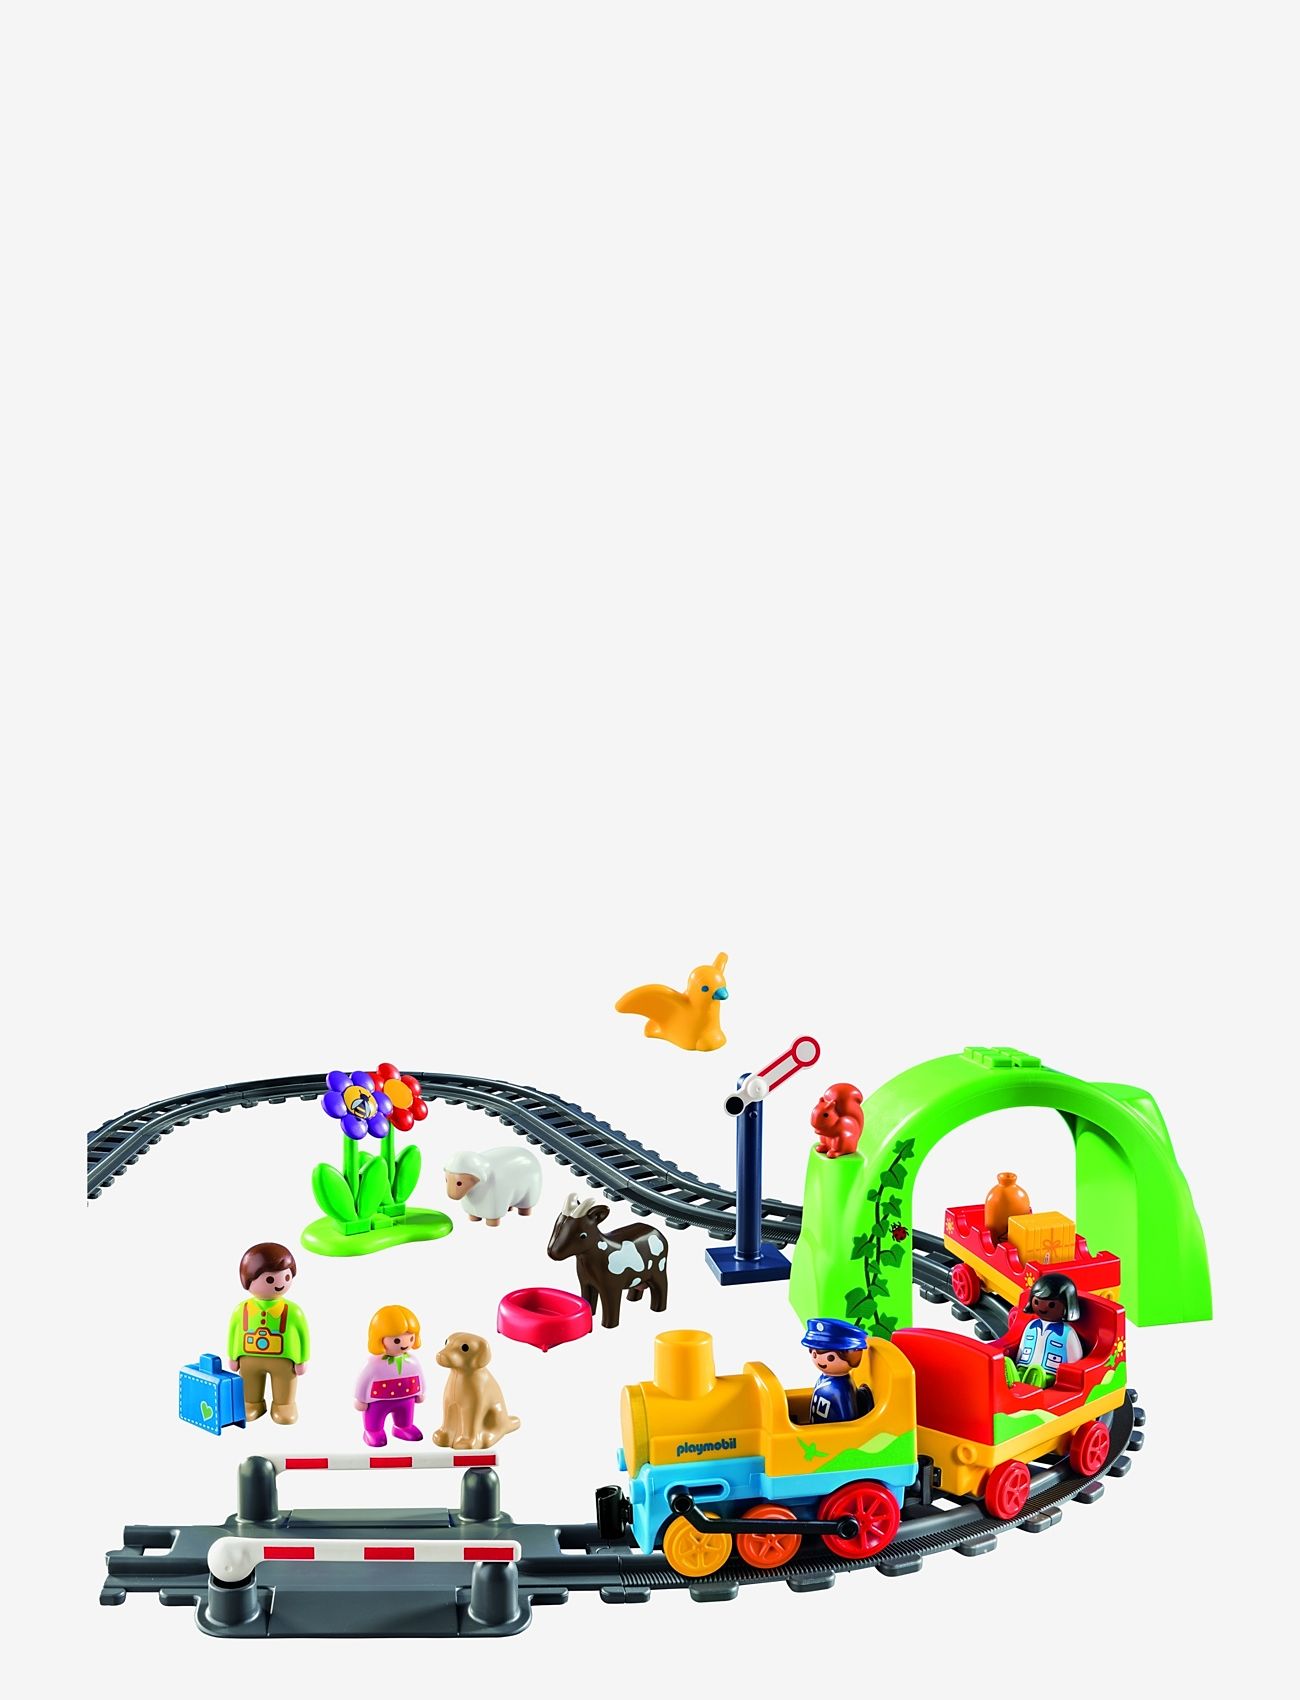 PLAYMOBIL - PLAYMOBIL 1.2.3 My First Train Set - 70179 - playmobil 1.2.3 - multicolored - 1